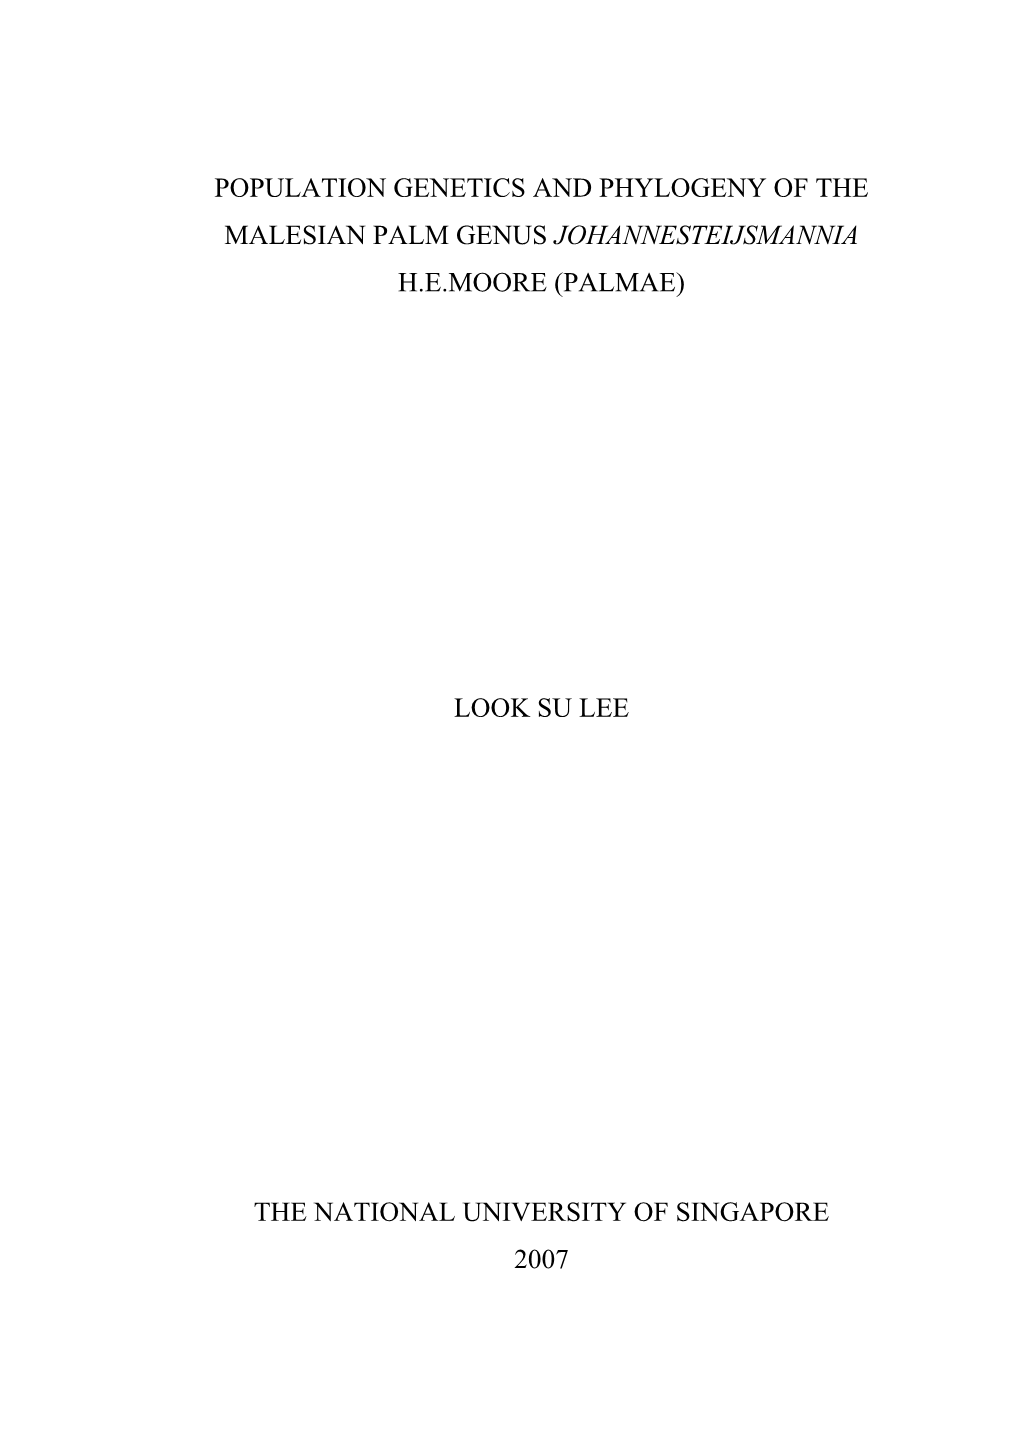 Population Genetics and Phylogeny of the Malesian Palm Genus Johannesteijsmannia H.E.Moore (Palmae)